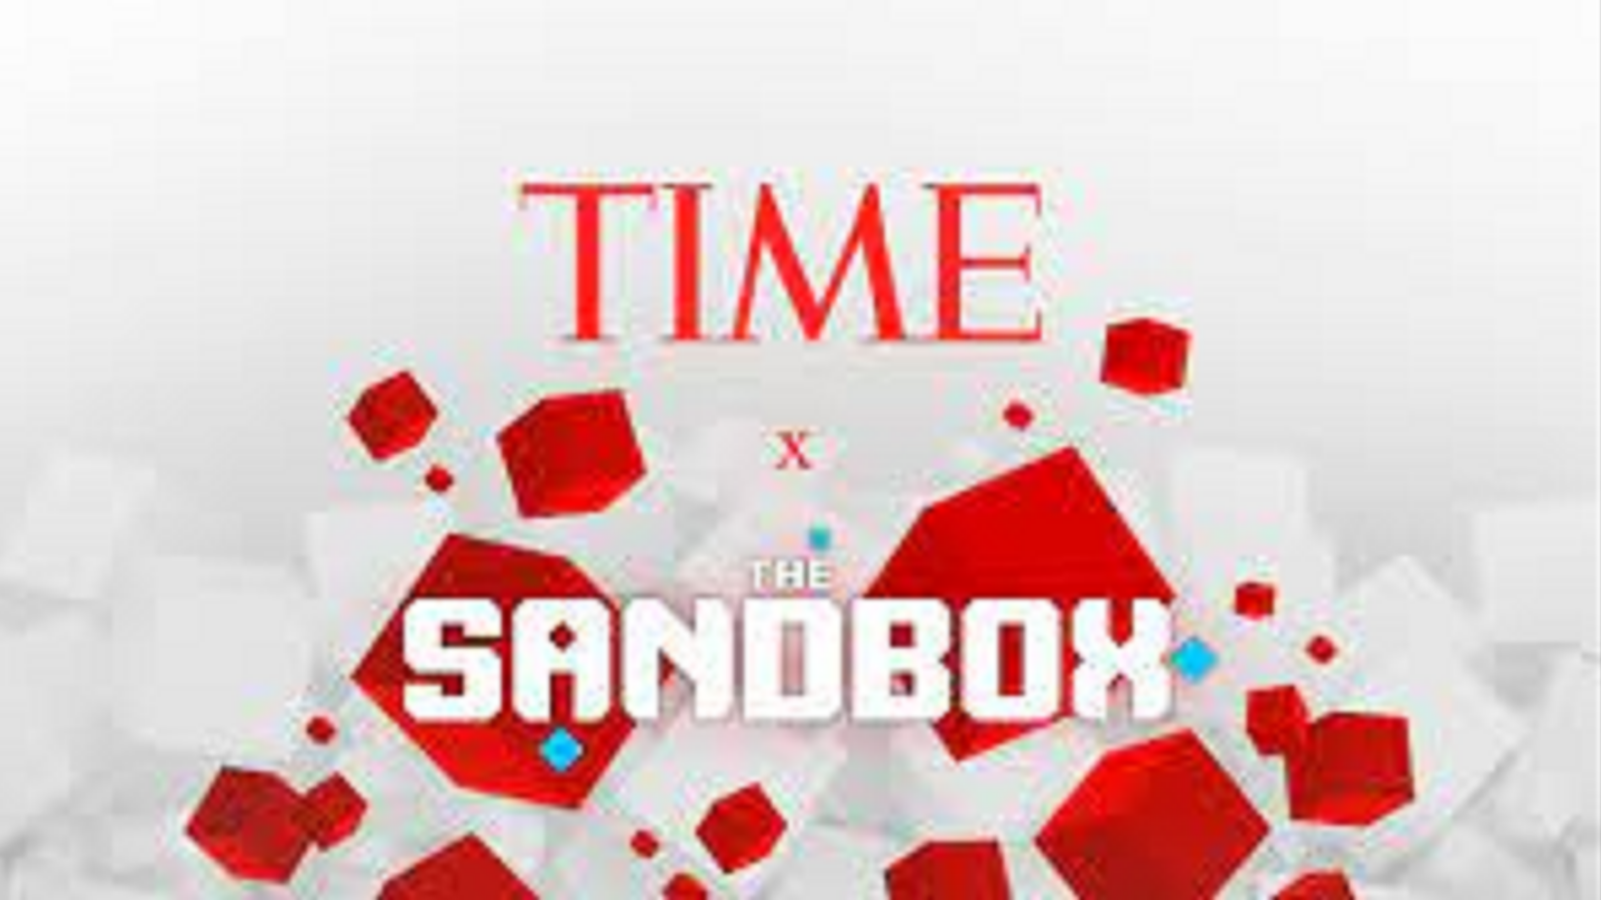 TIME Magazine & The Sandbox